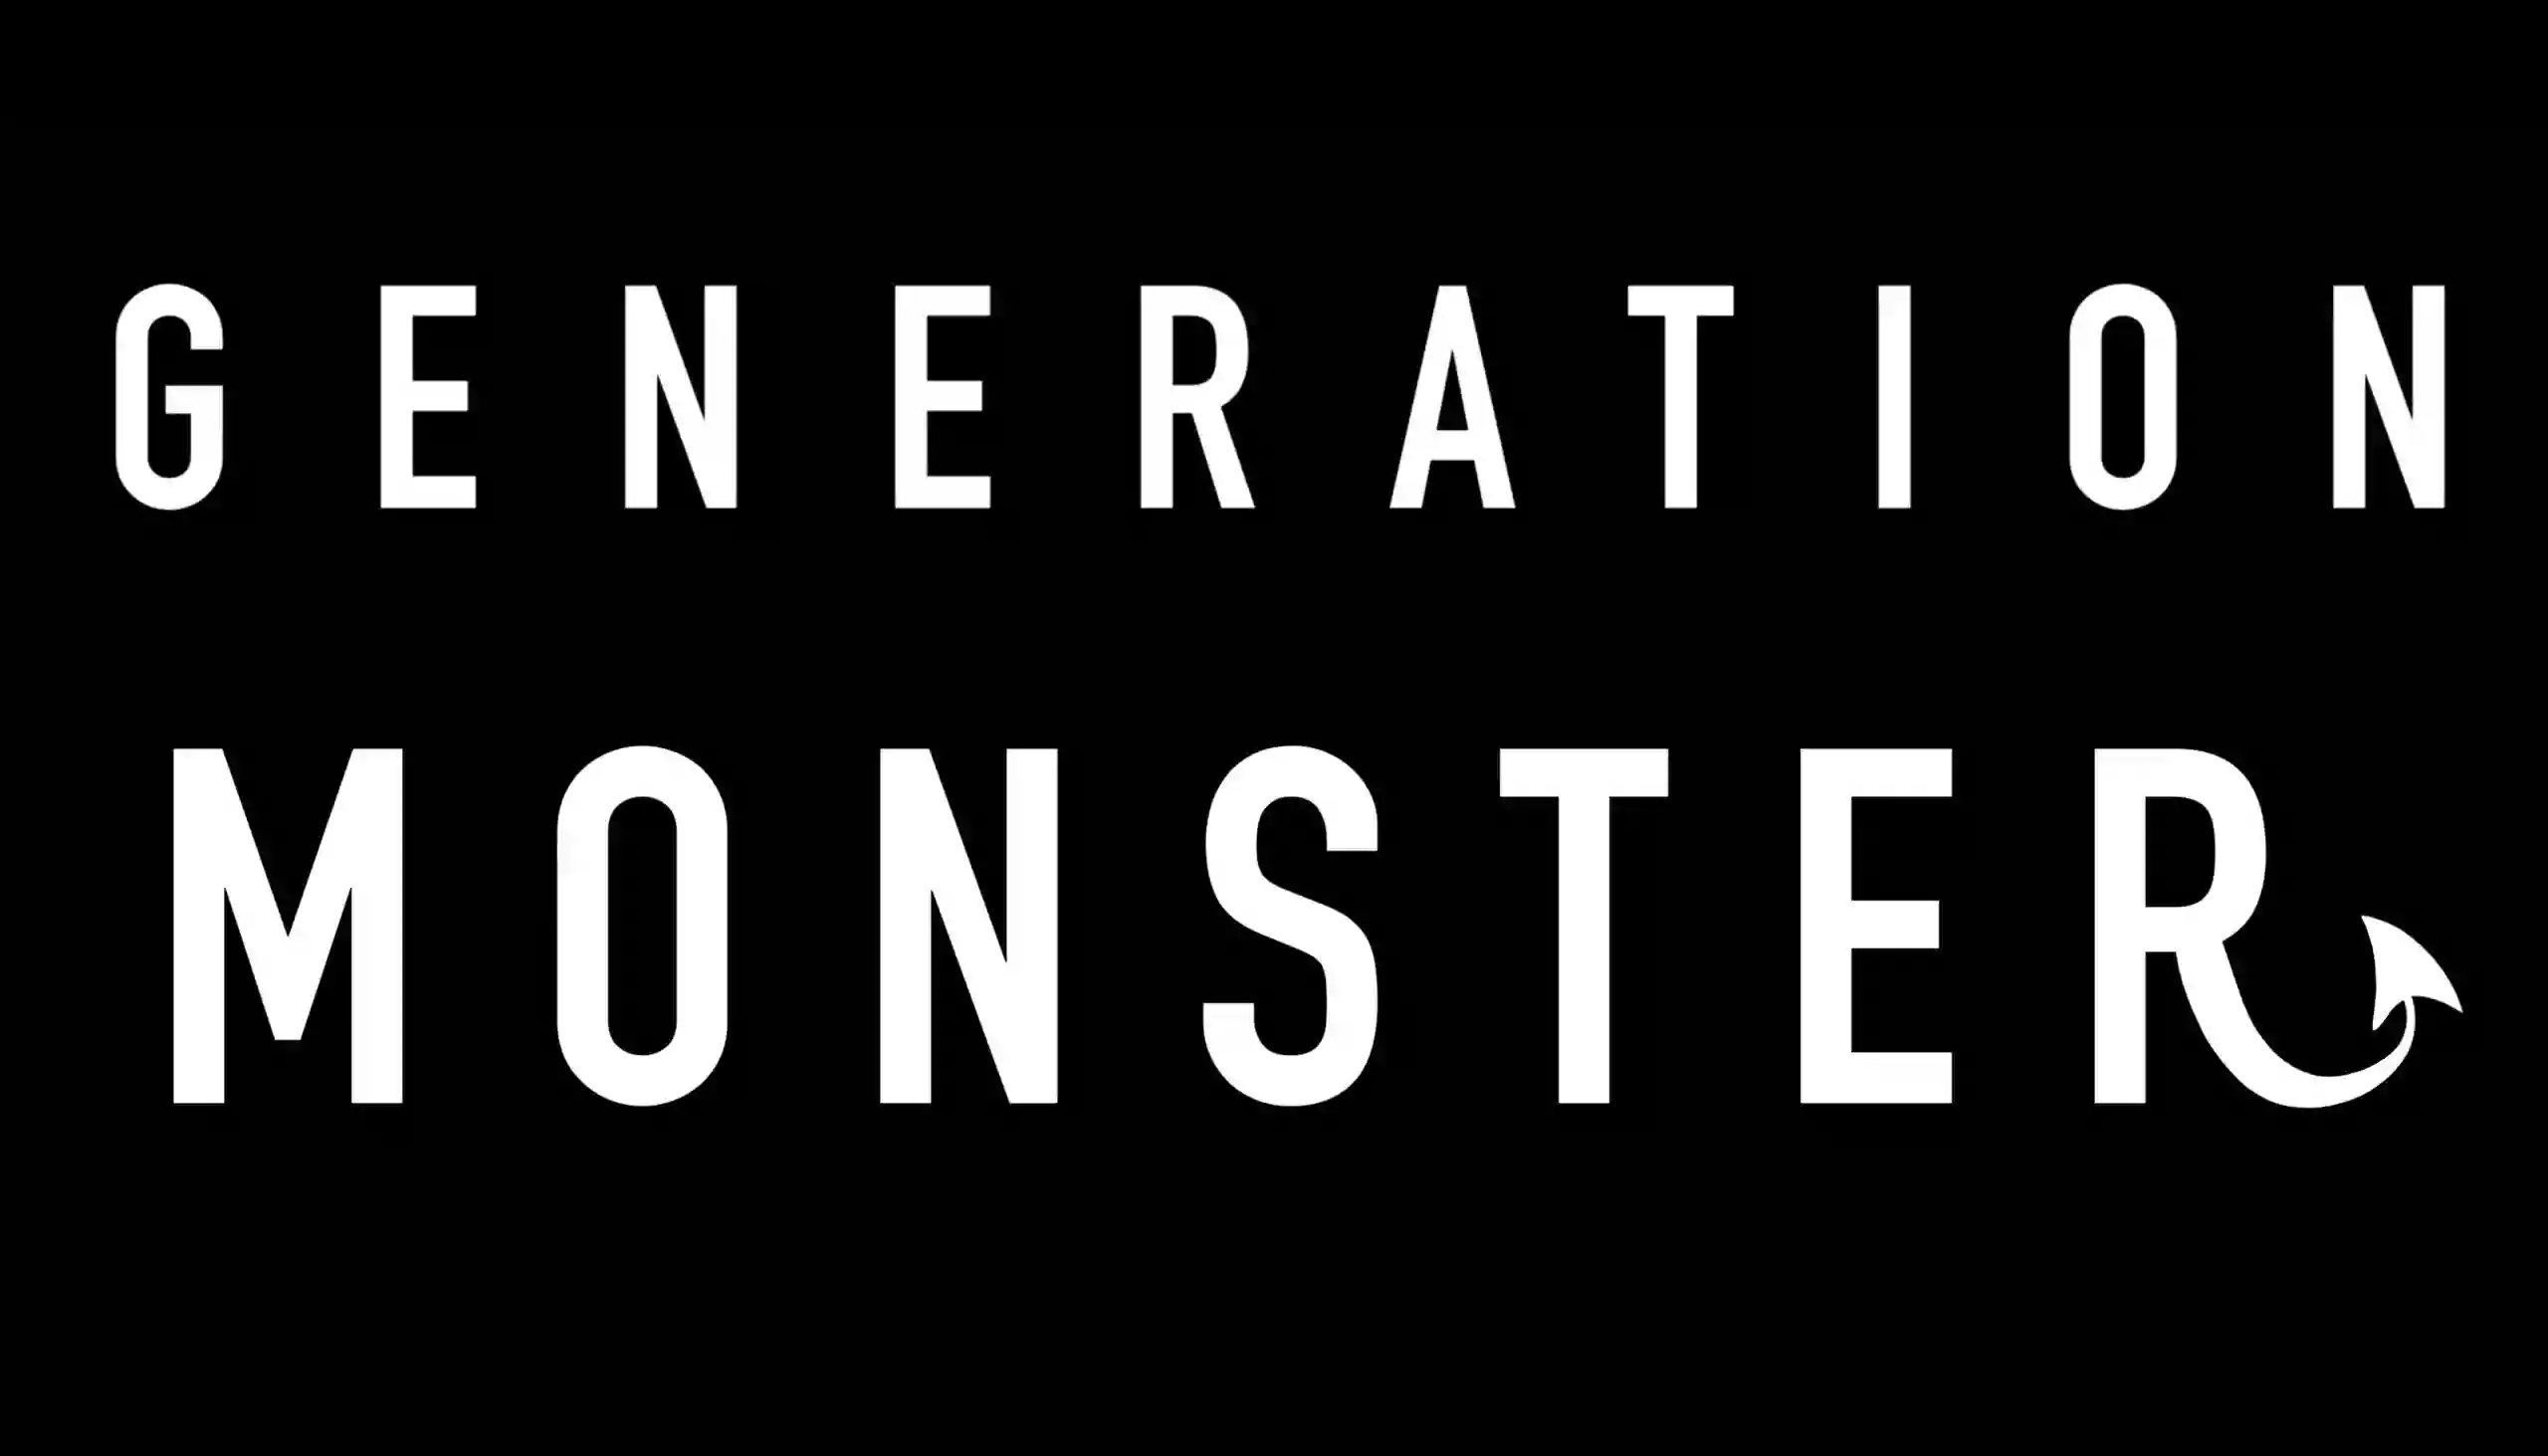 Generation Monster